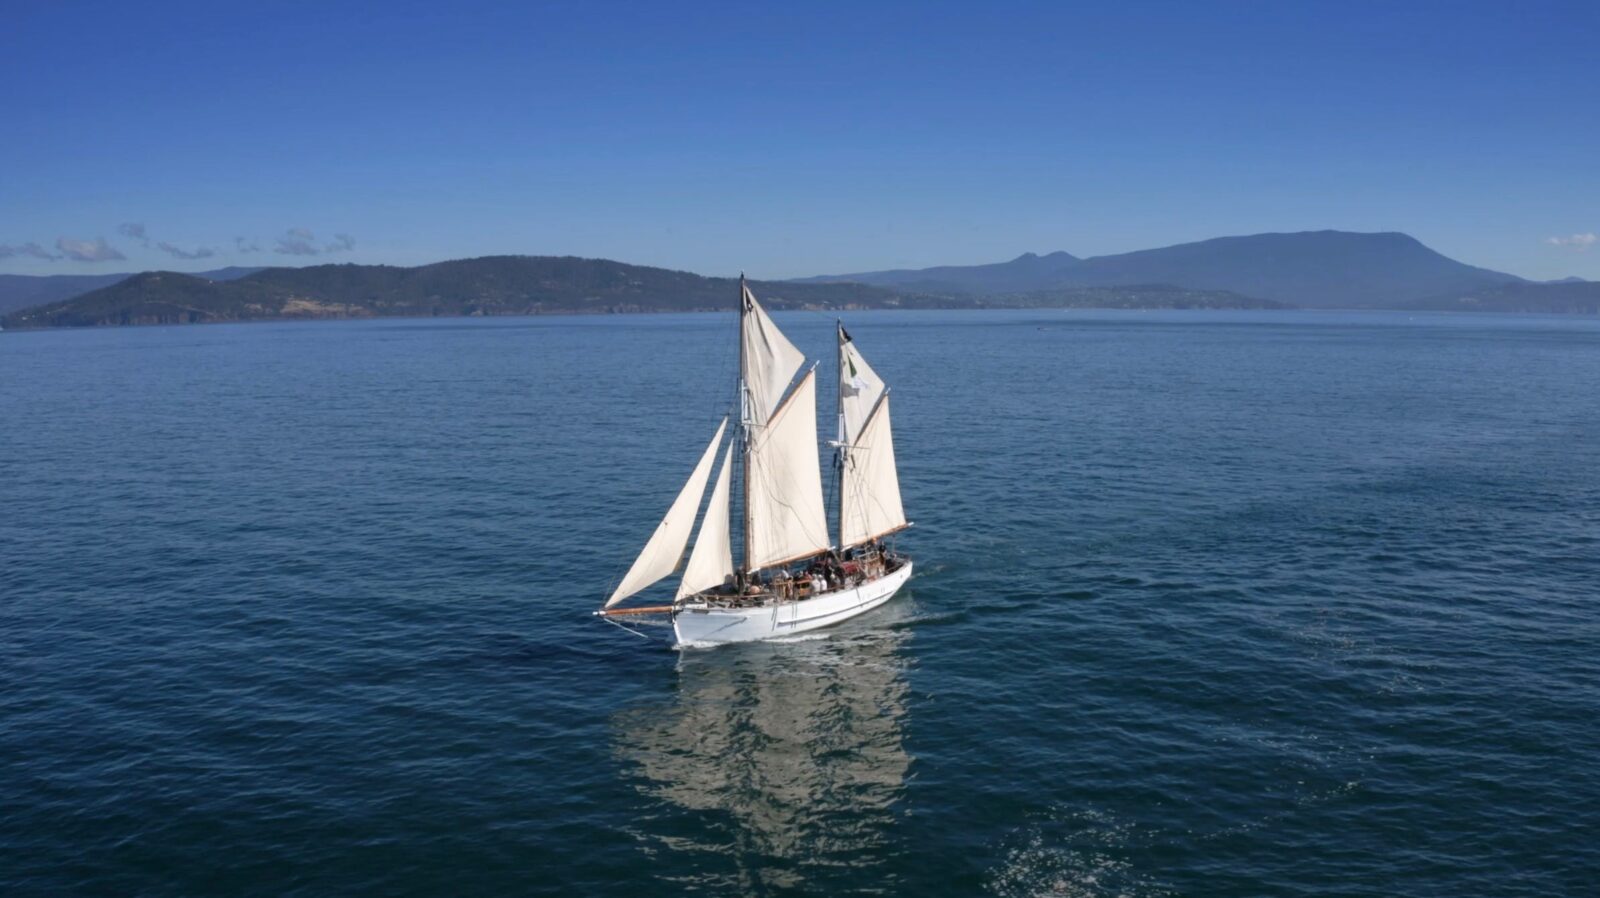 Rhona H under full sail